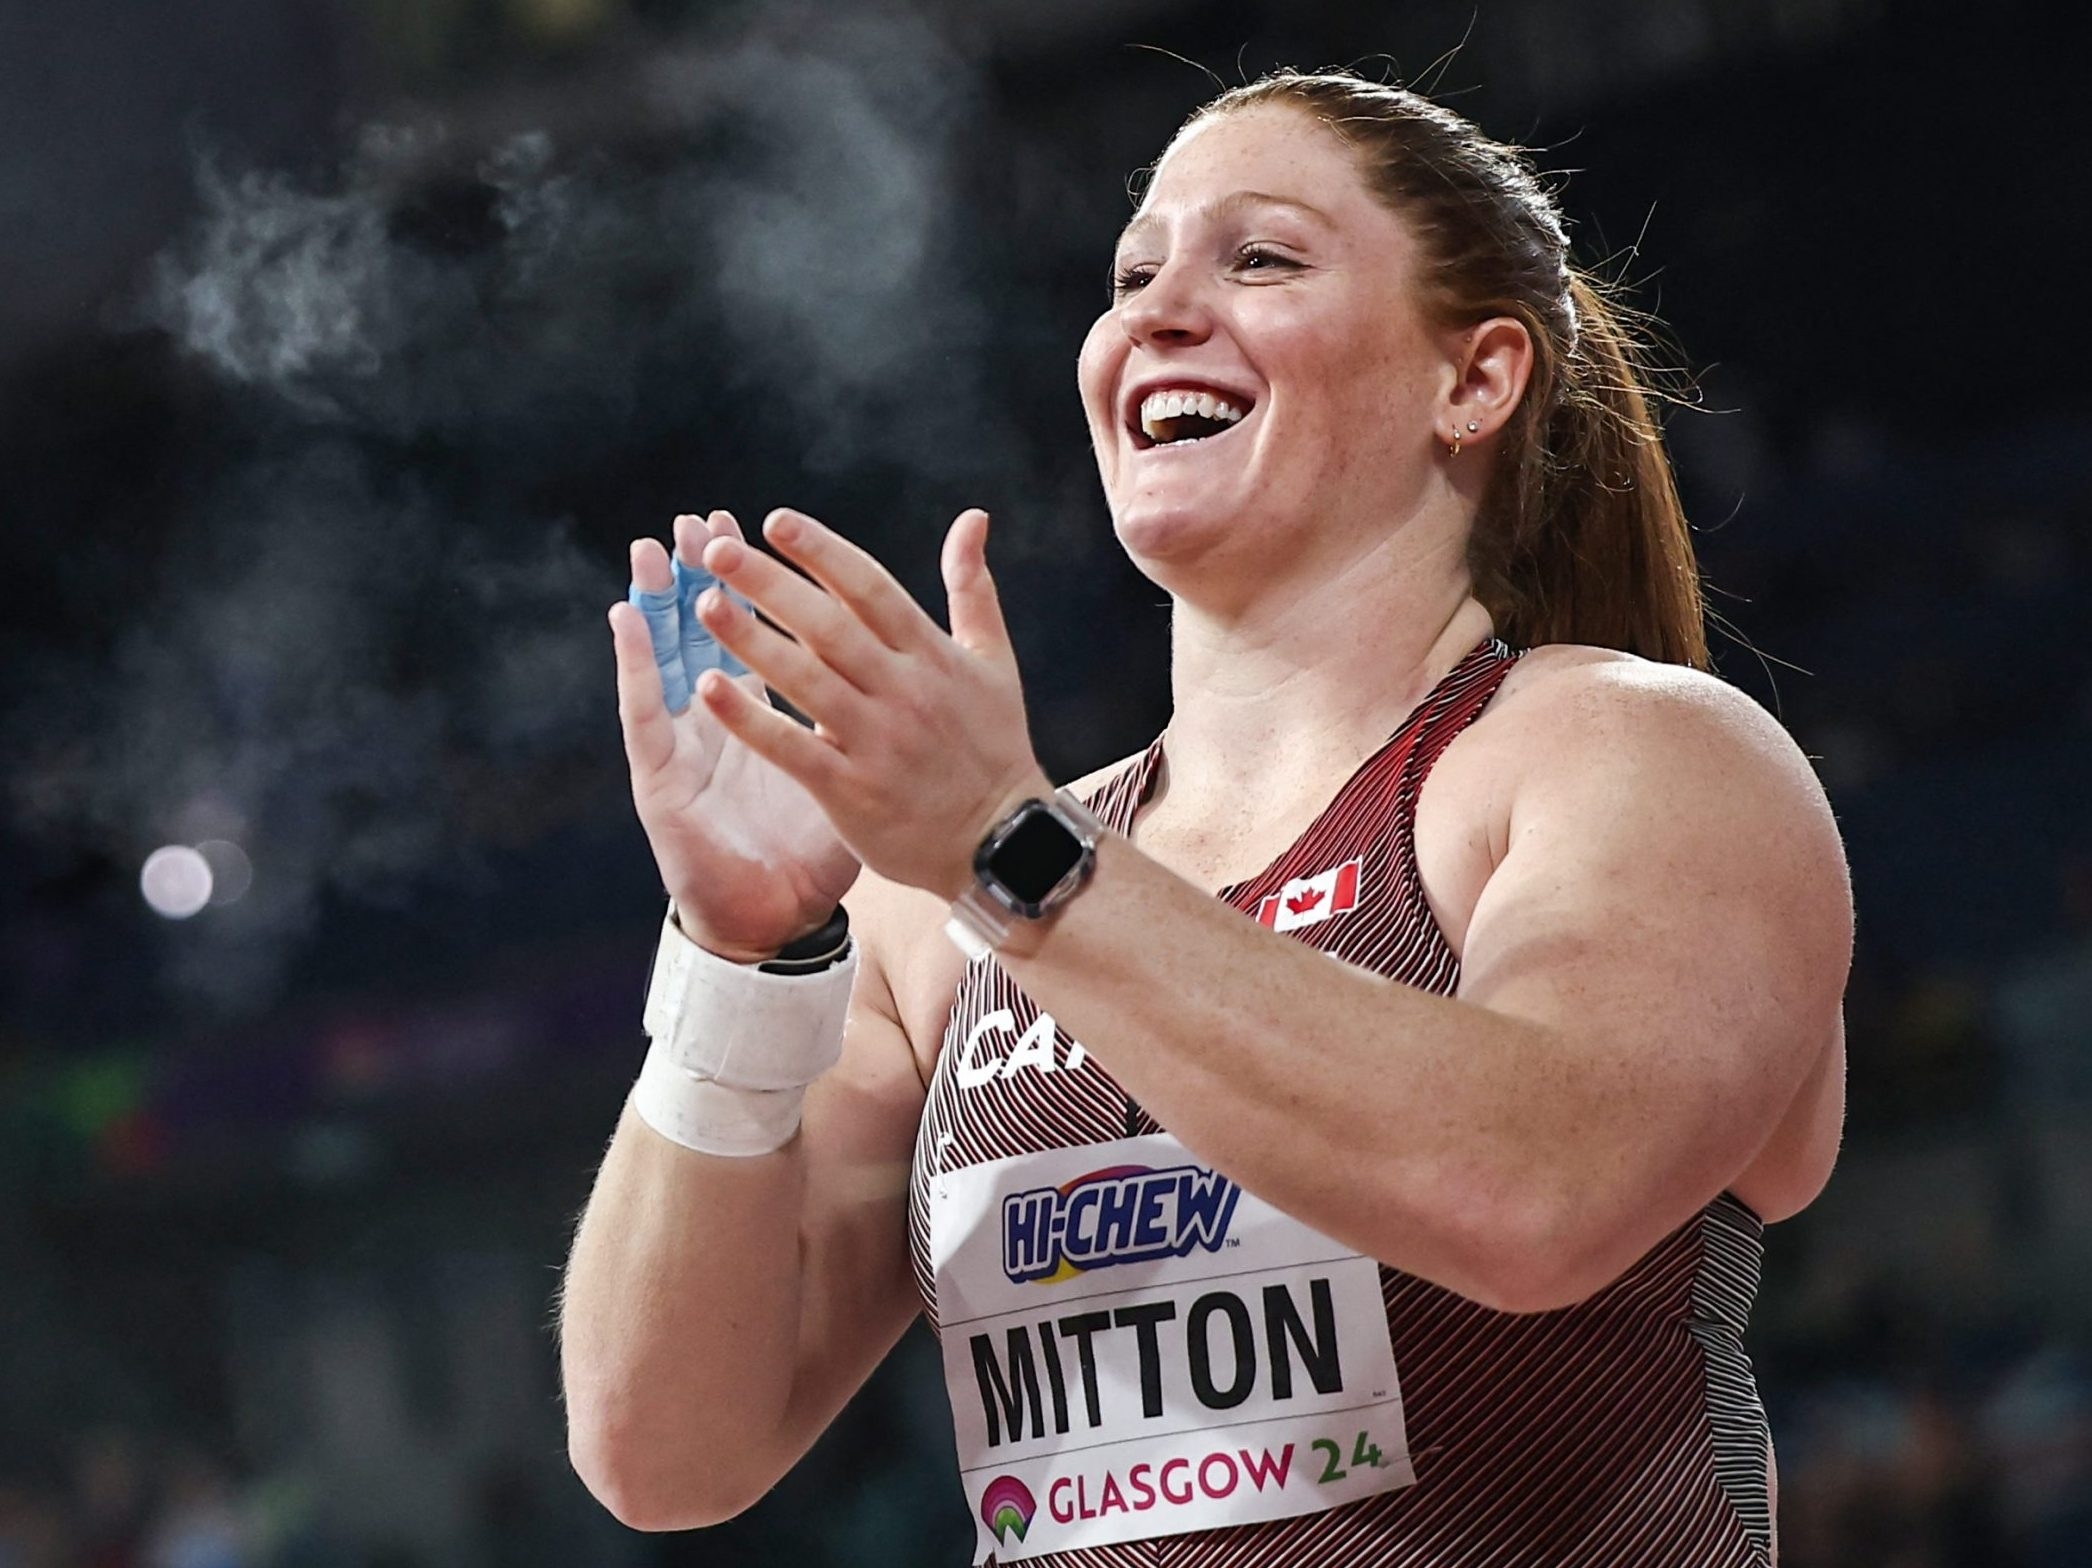 Sarah Mitton wins gold at world indoor athletics championships